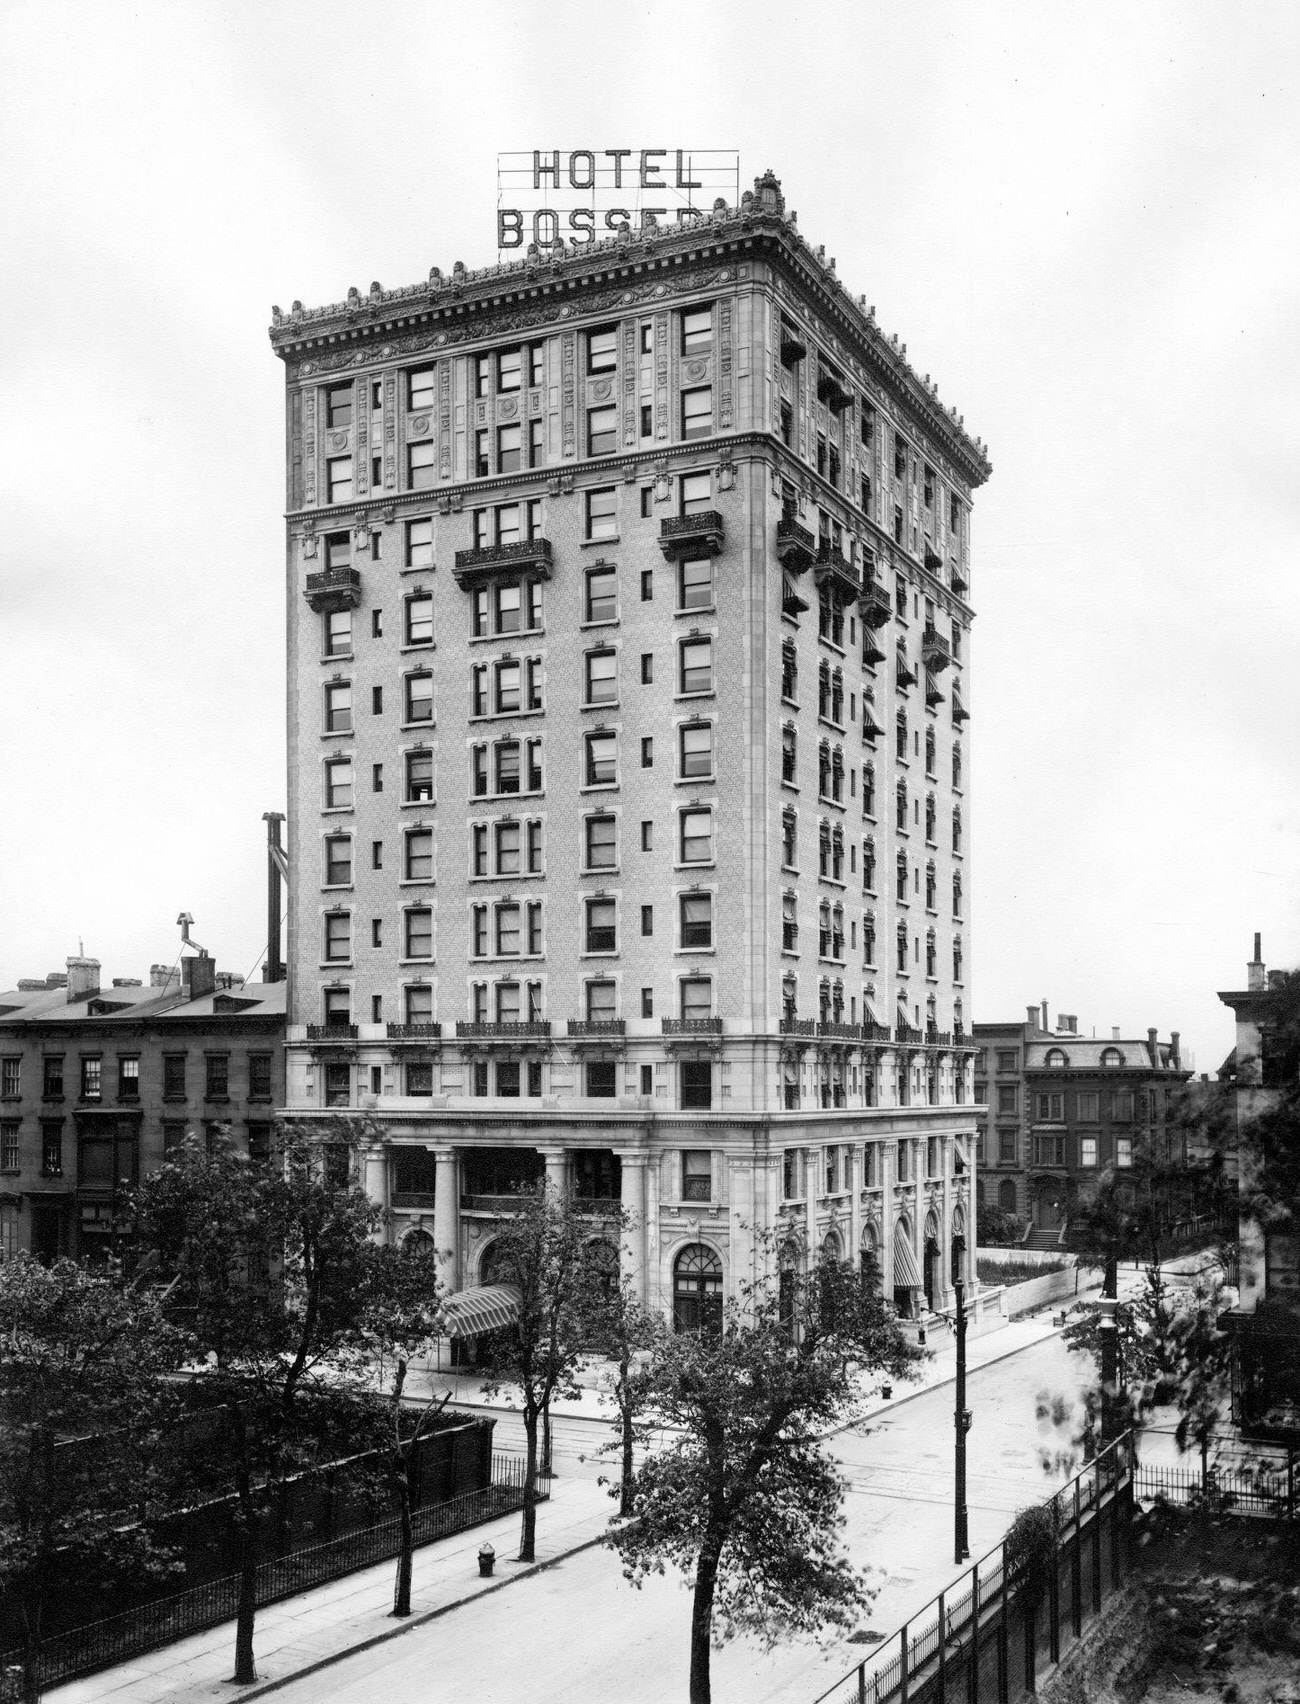 Hotel Bossert On Montague Street, Brooklyn, 1895.